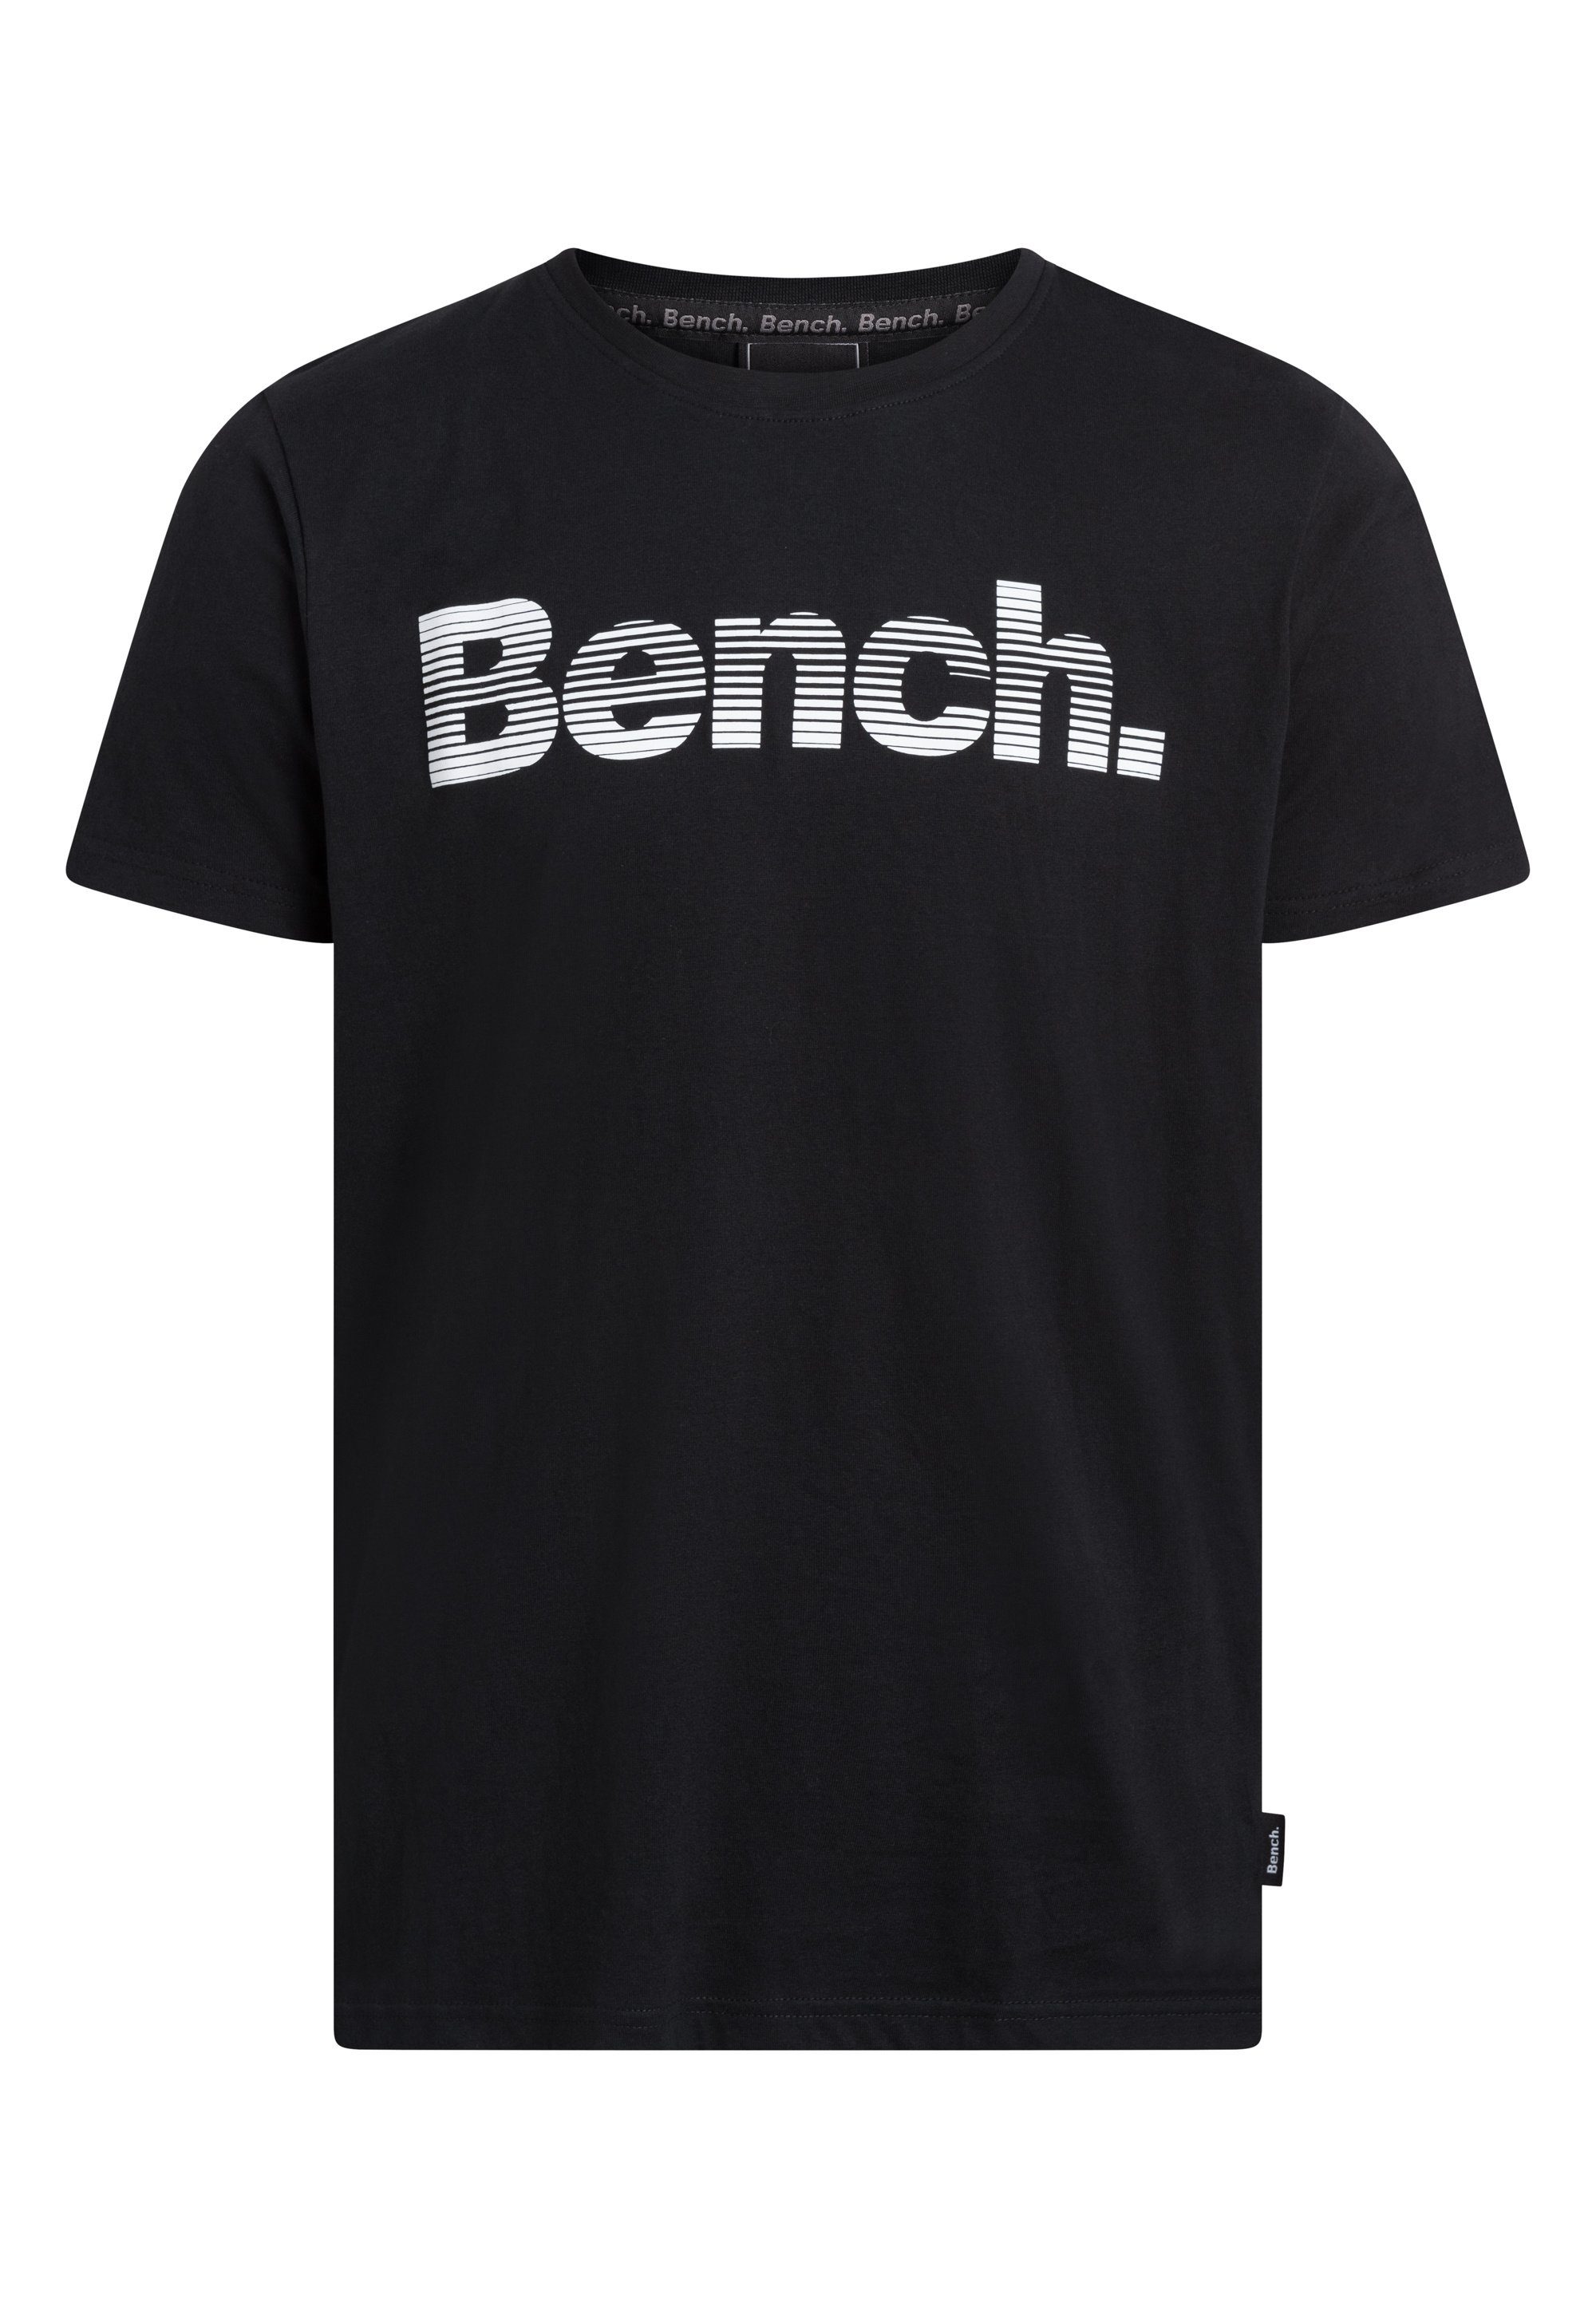 Angabe Leandro T-Shirt schwarz Keine Bench.